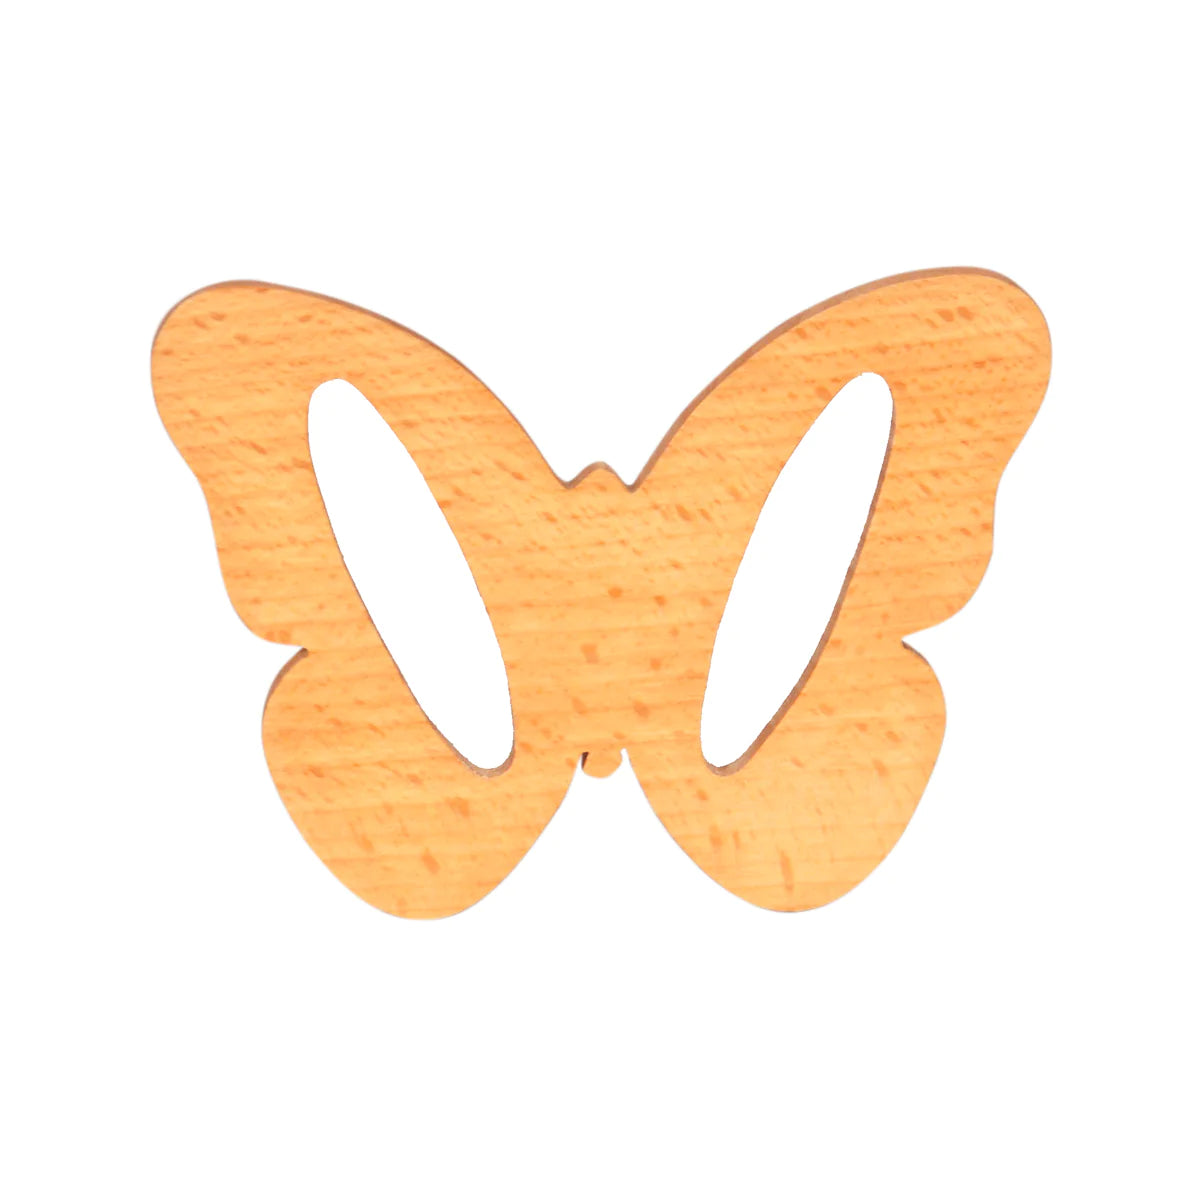 Buy Thasvi Wooden Teethers  - SkilloToys.com